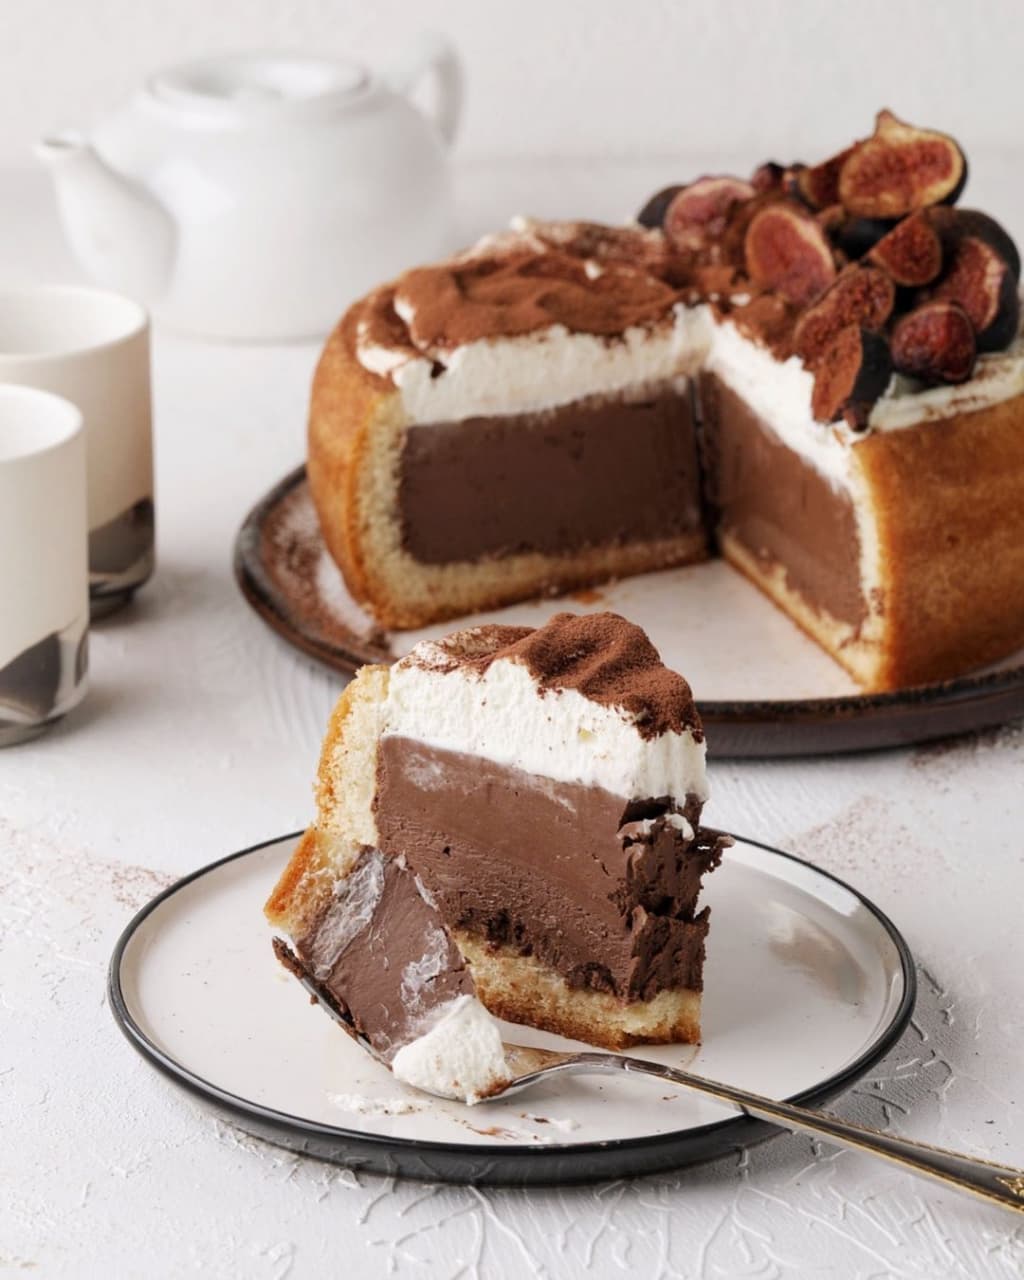 No-bake chocolate cheesecake with whipped cream